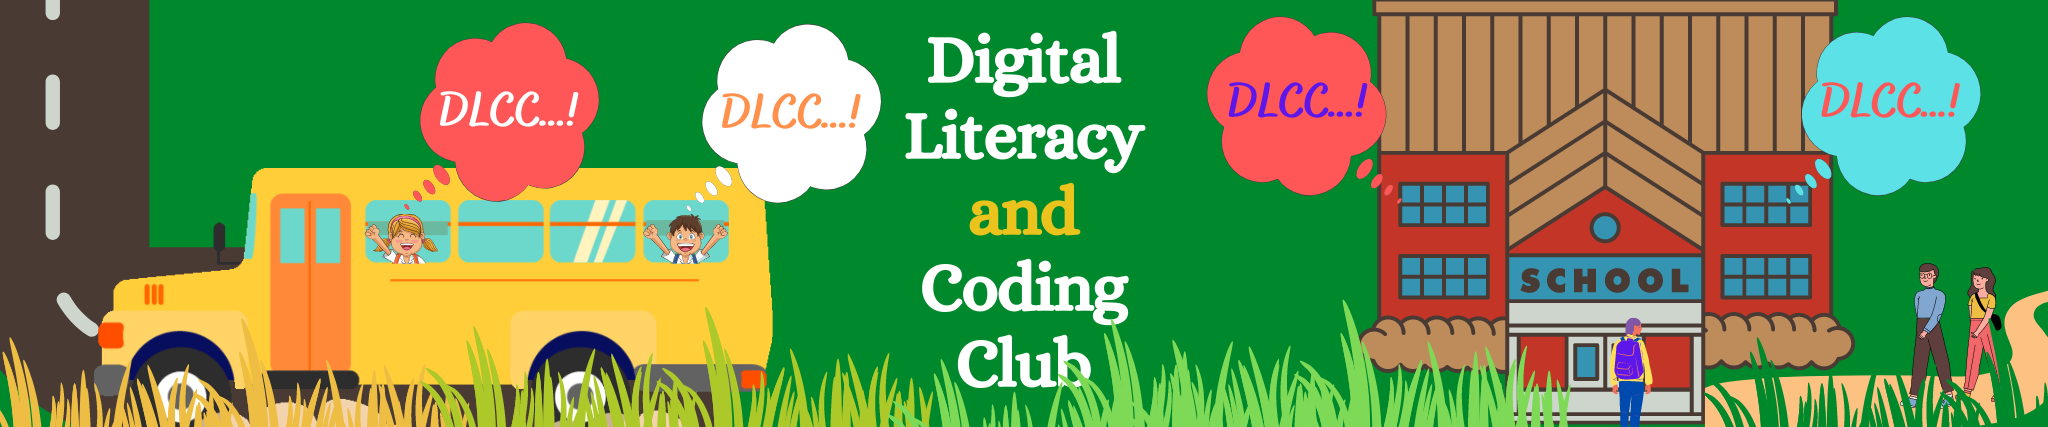 Digital Literacy and Coding Club